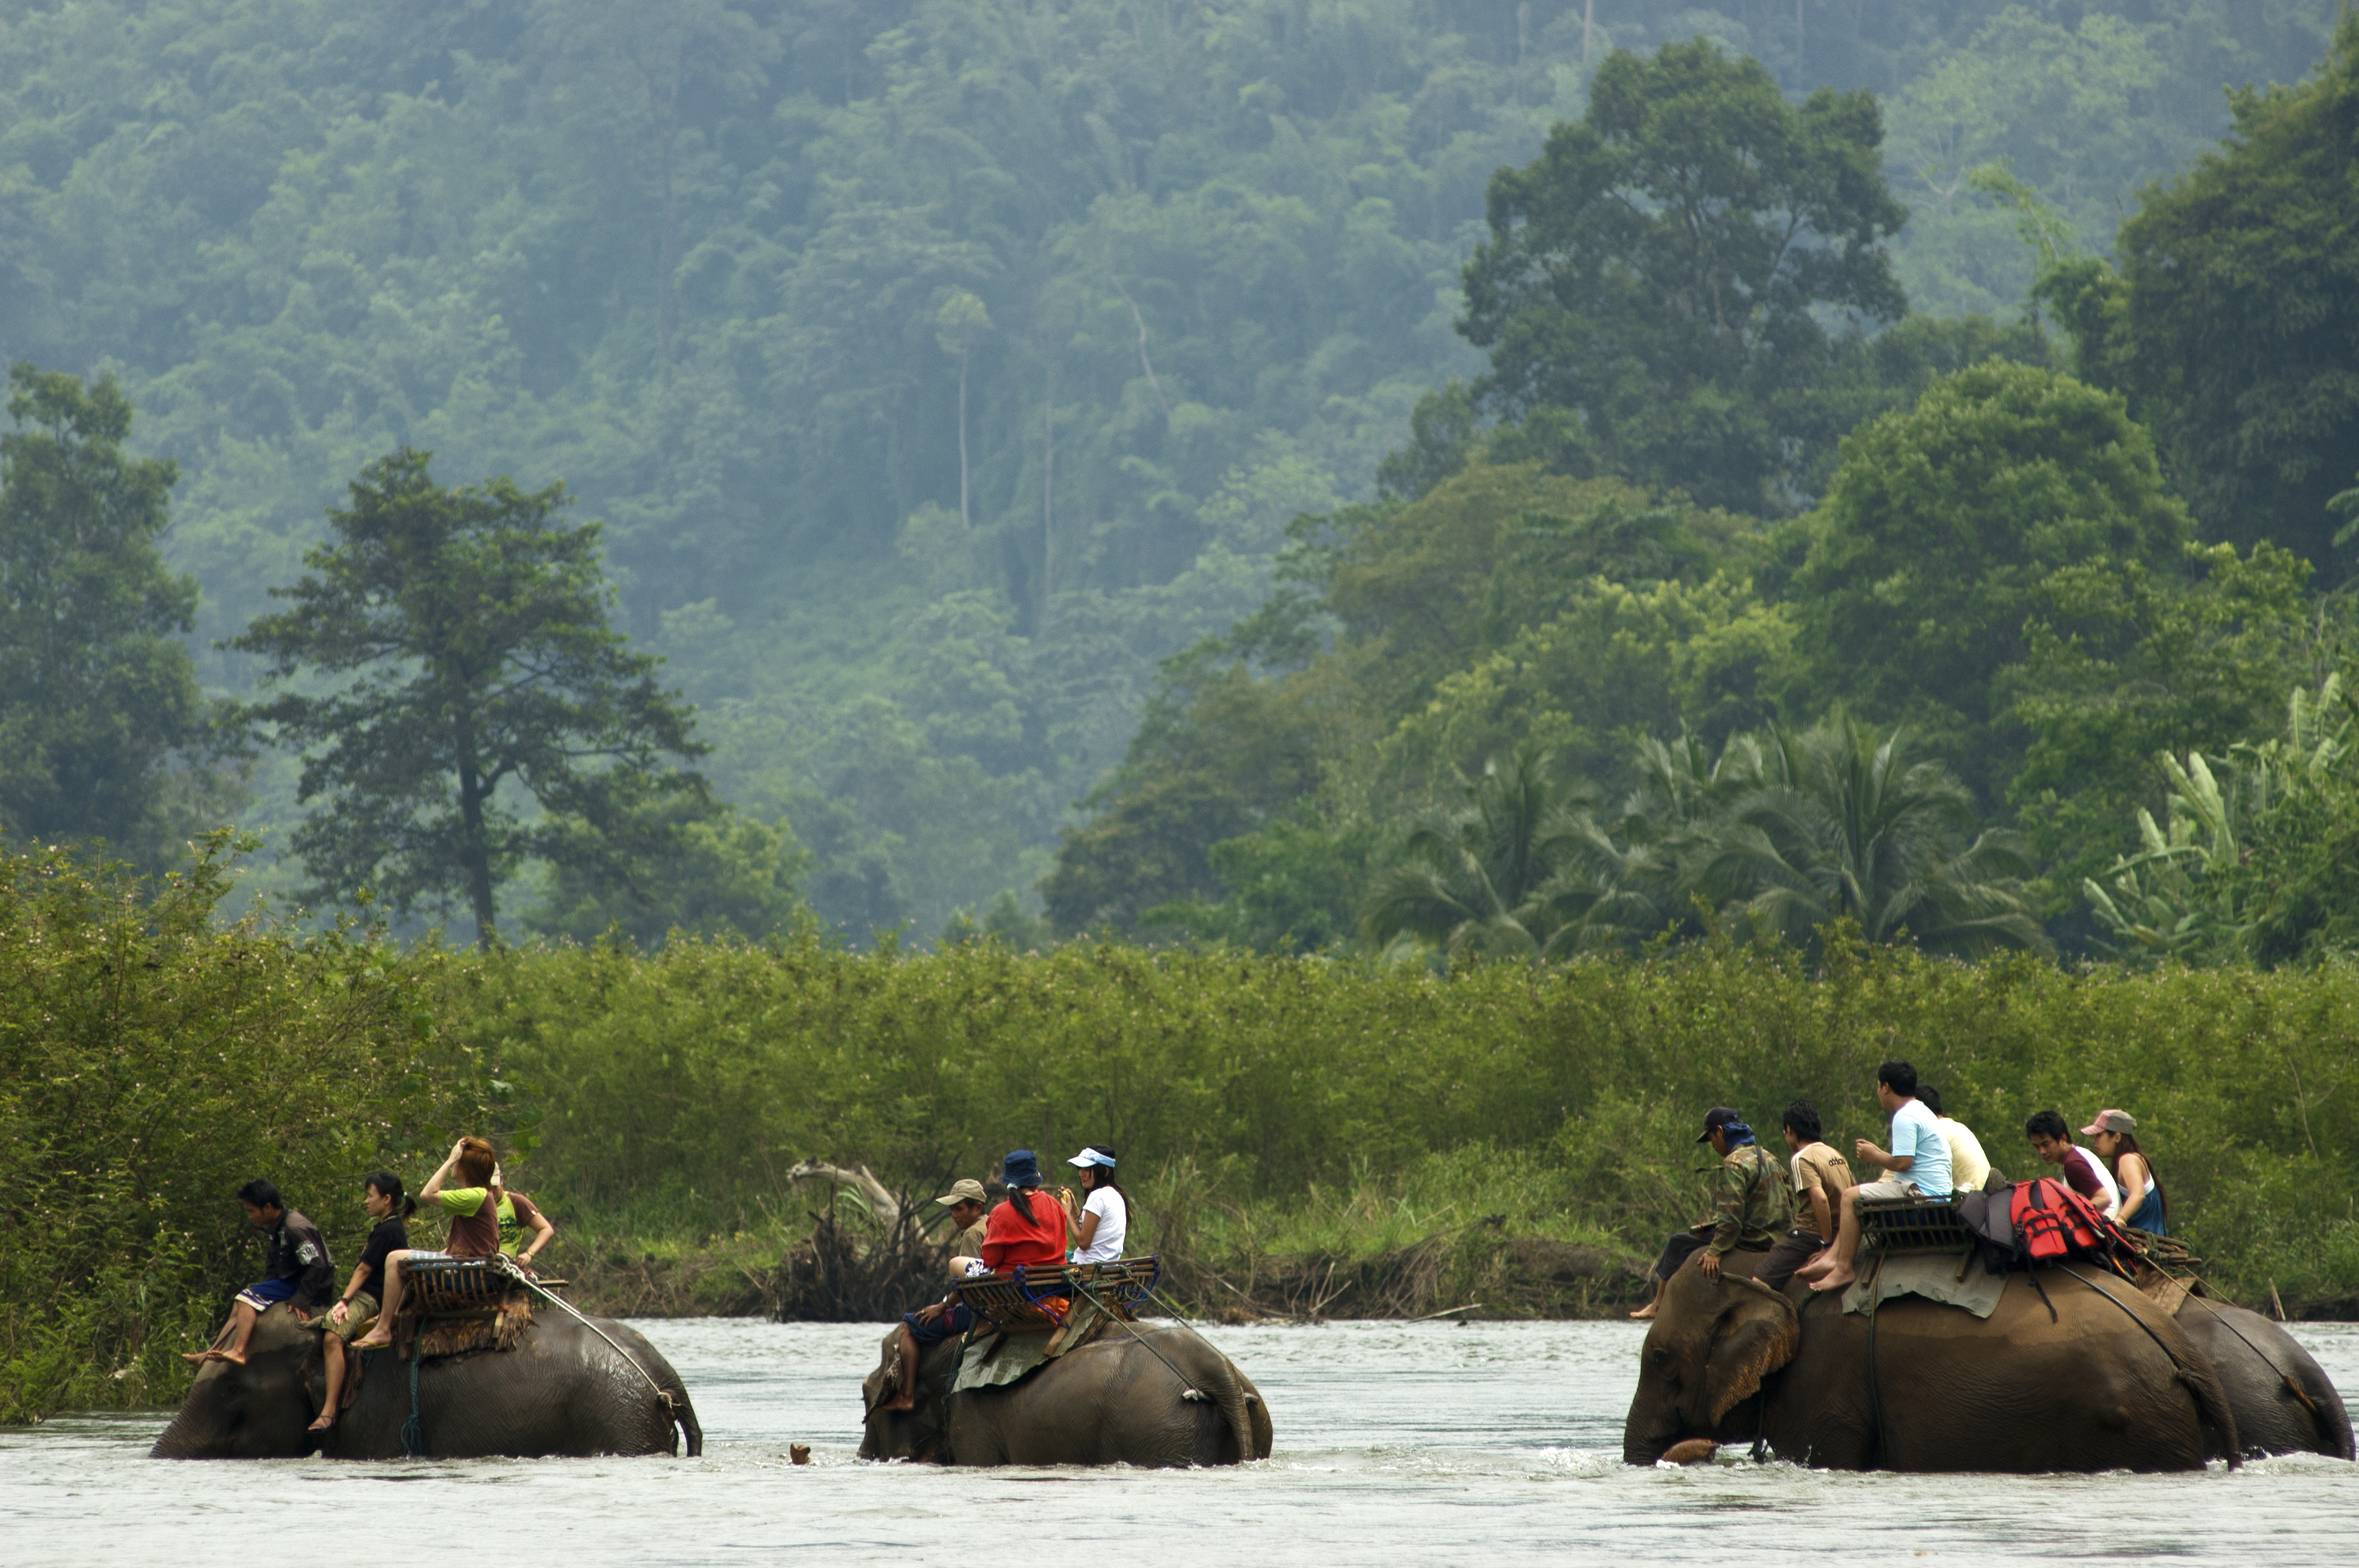 Elephant riding (Raweewan Thongsrimadun)